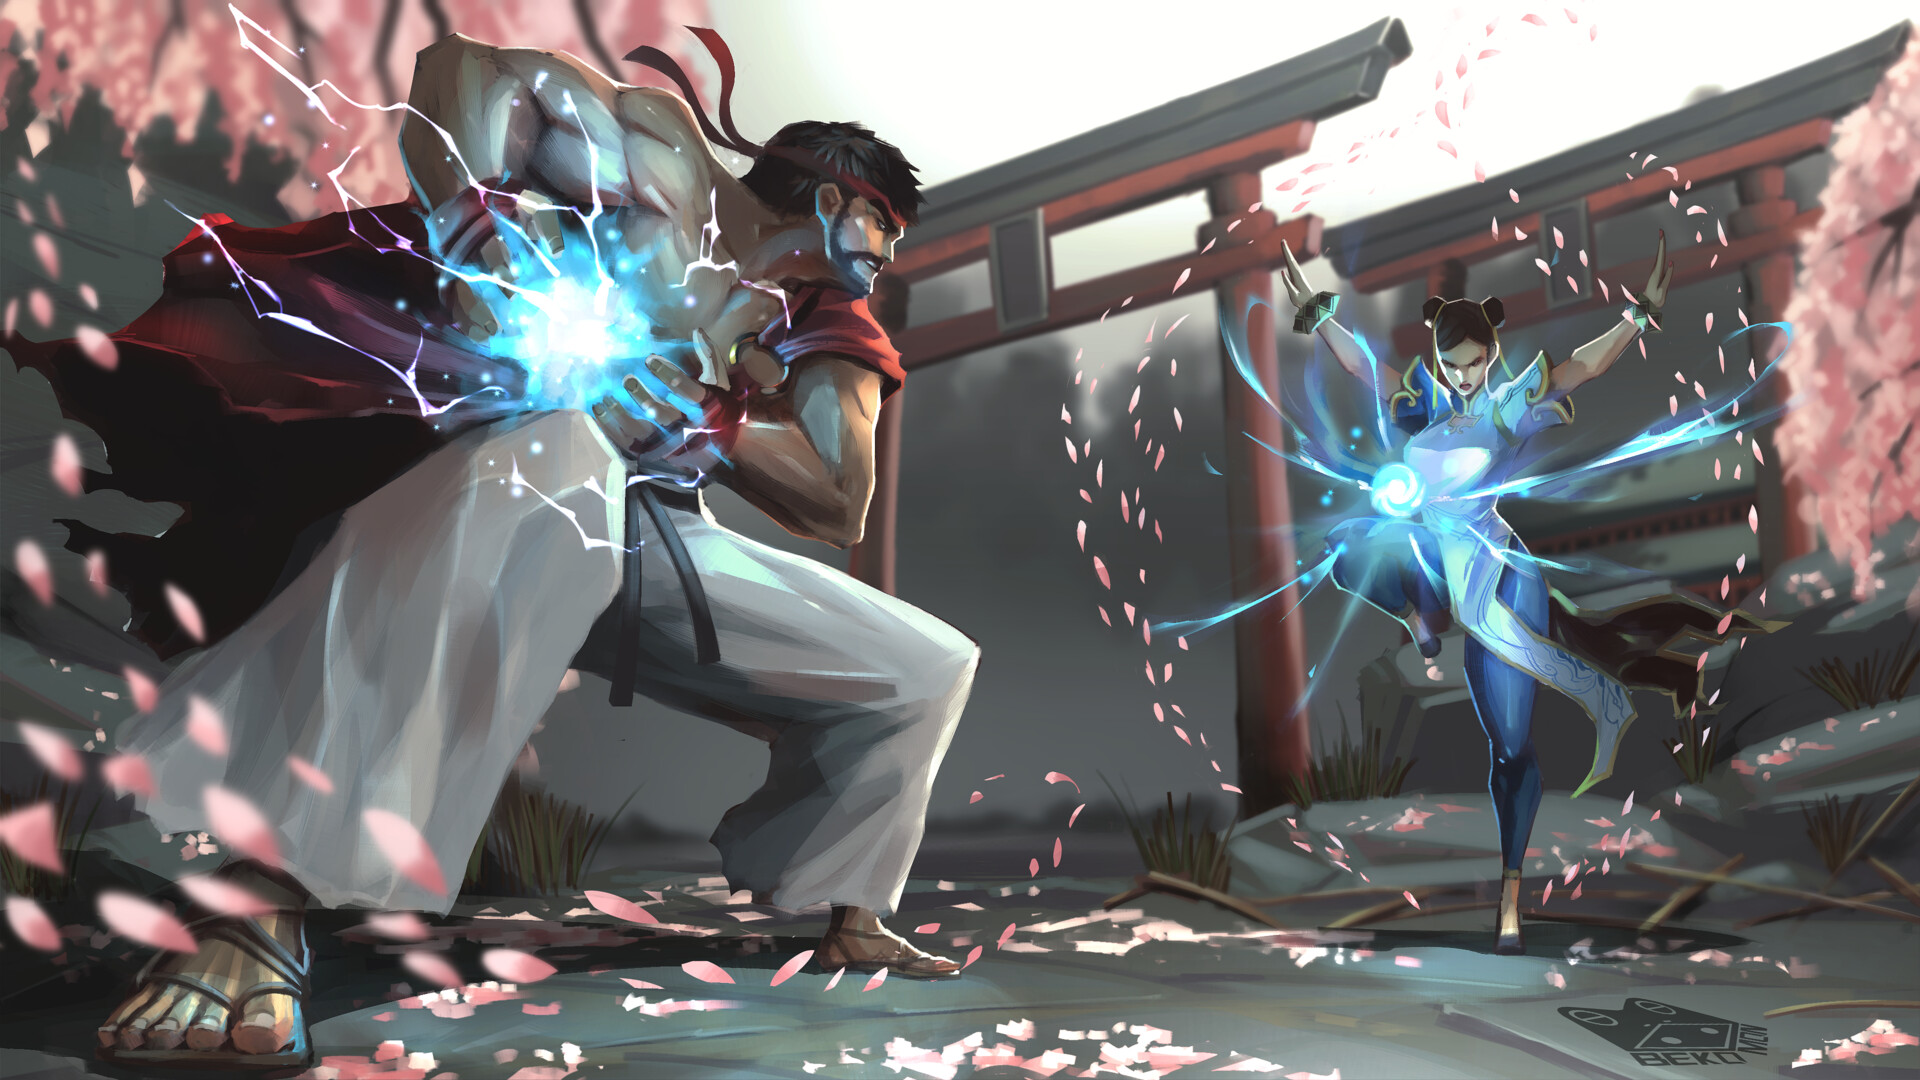 Street fighter 6 Chun-Li and Ryu by RAvEcREAToR23 on DeviantArt